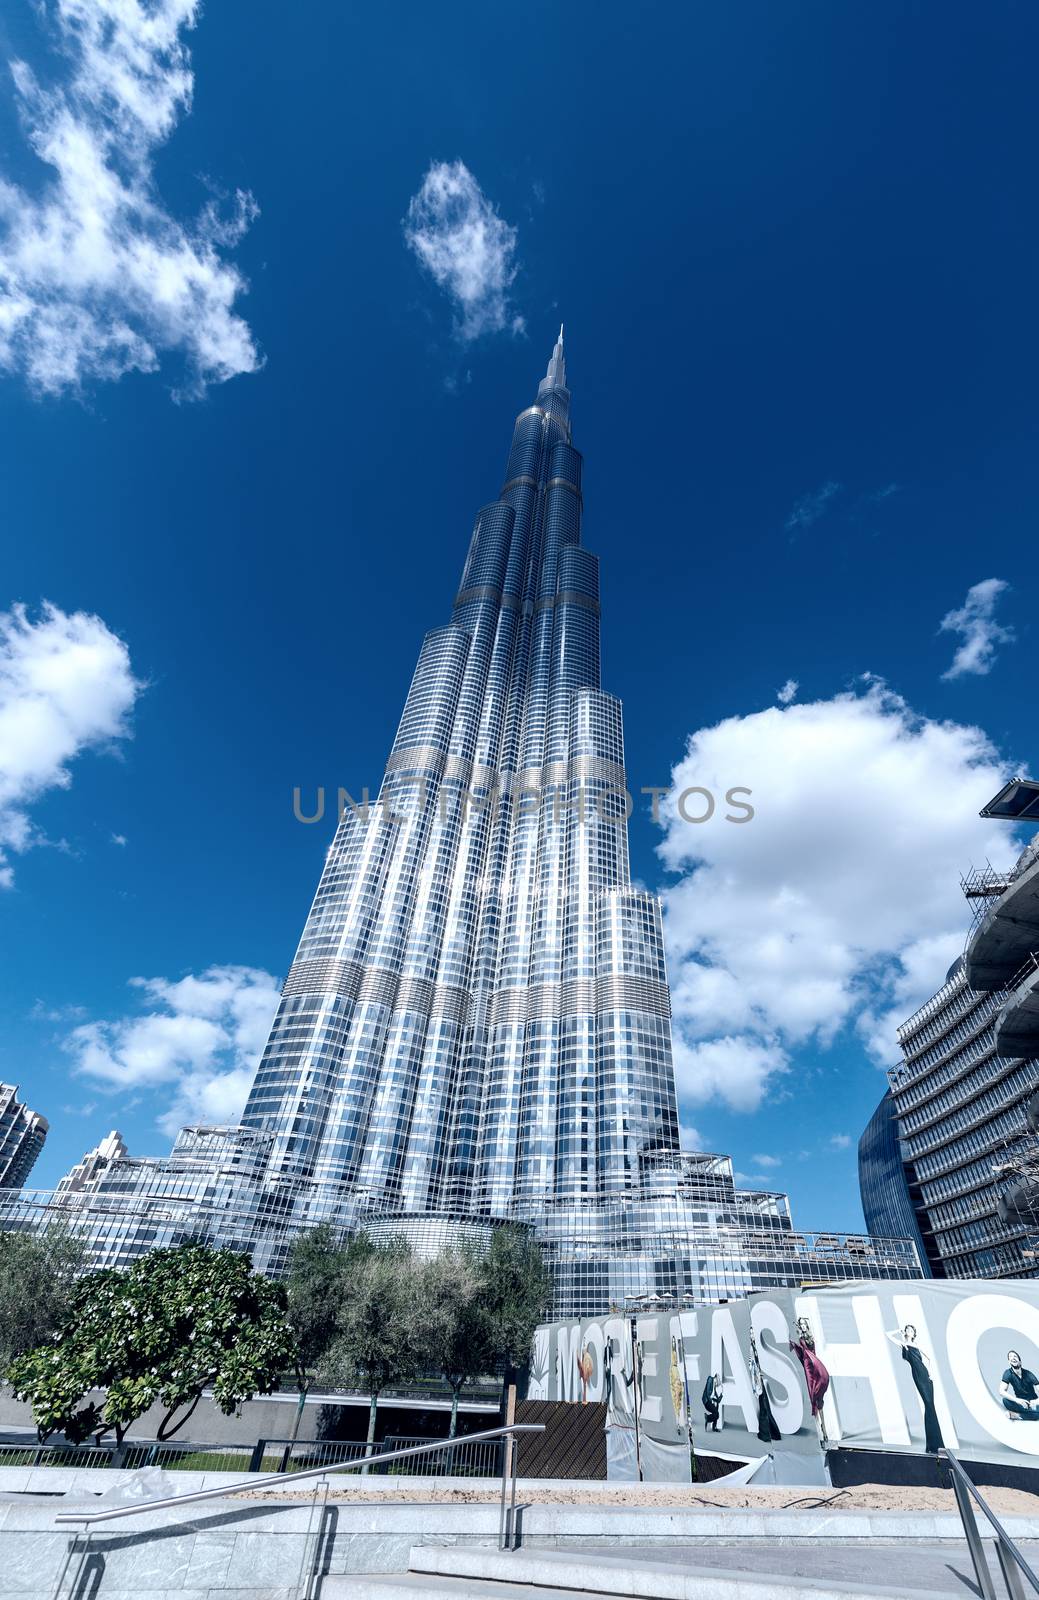 DUBAI, UAE - NOVEMBER 22, 2015: Burj Khalifa, the highest building in the world, 829.8 m tall. It is the new symbol of the city.